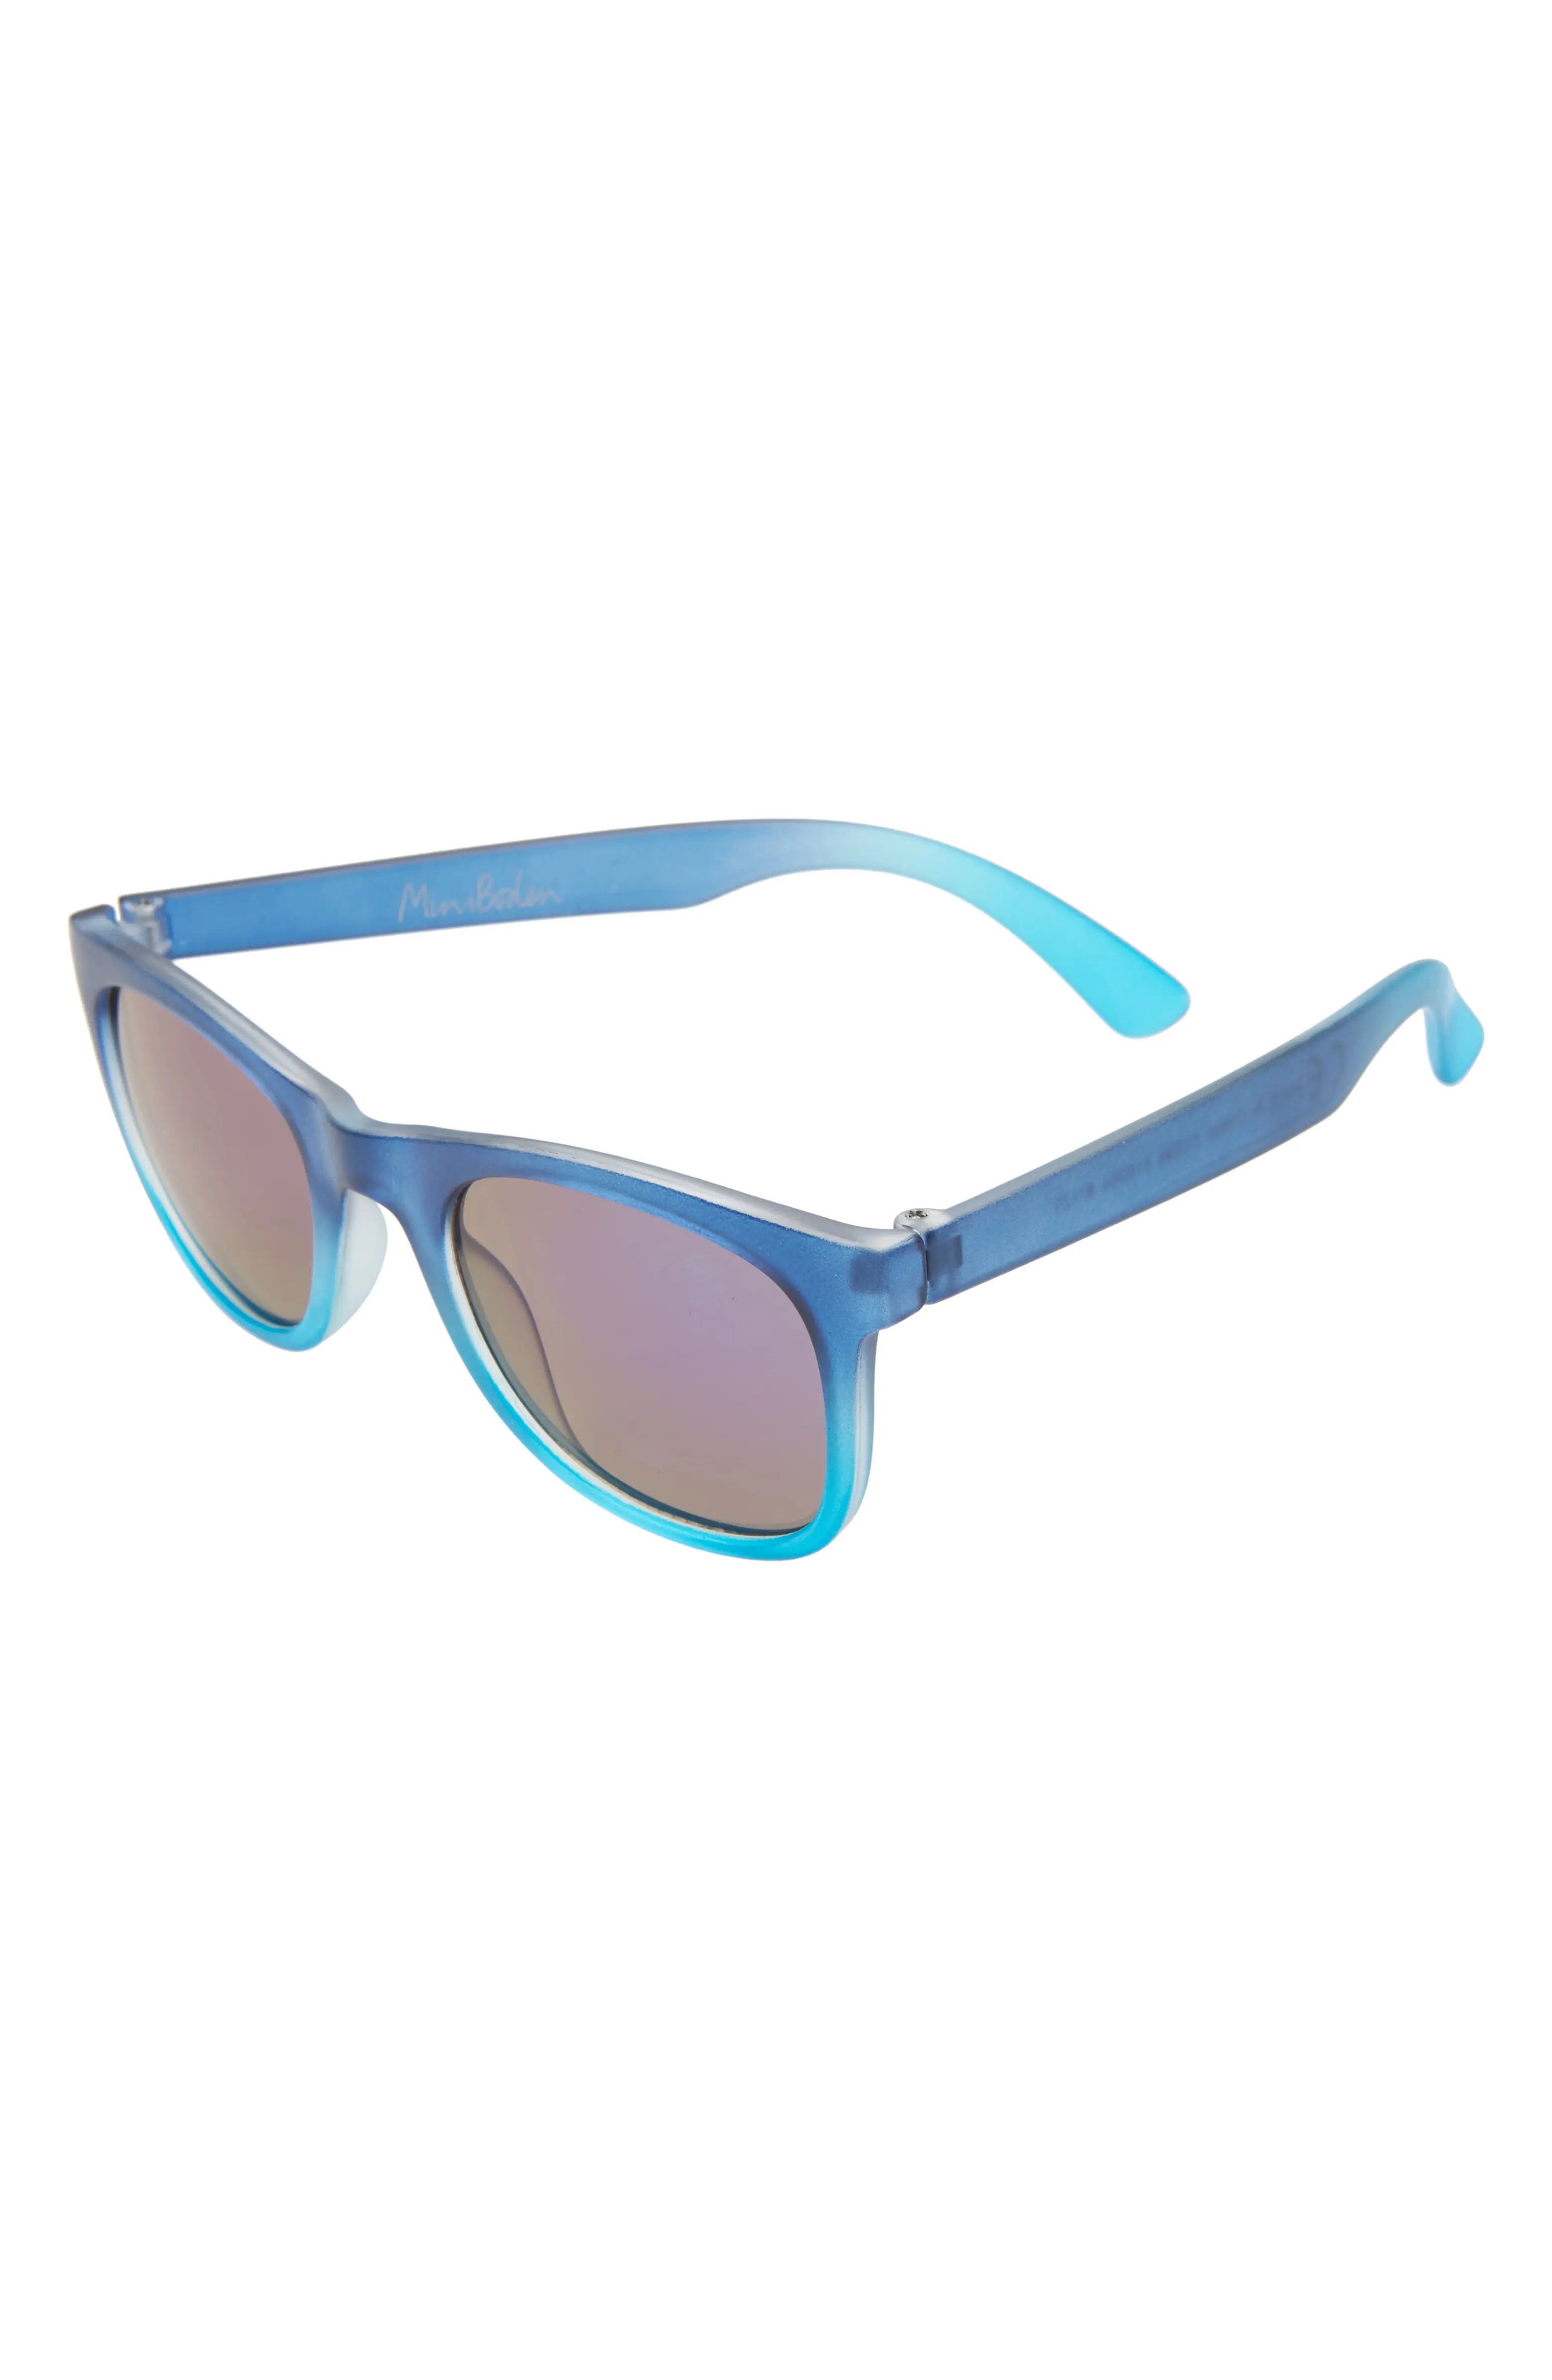 Sunglasses | Nordstrom